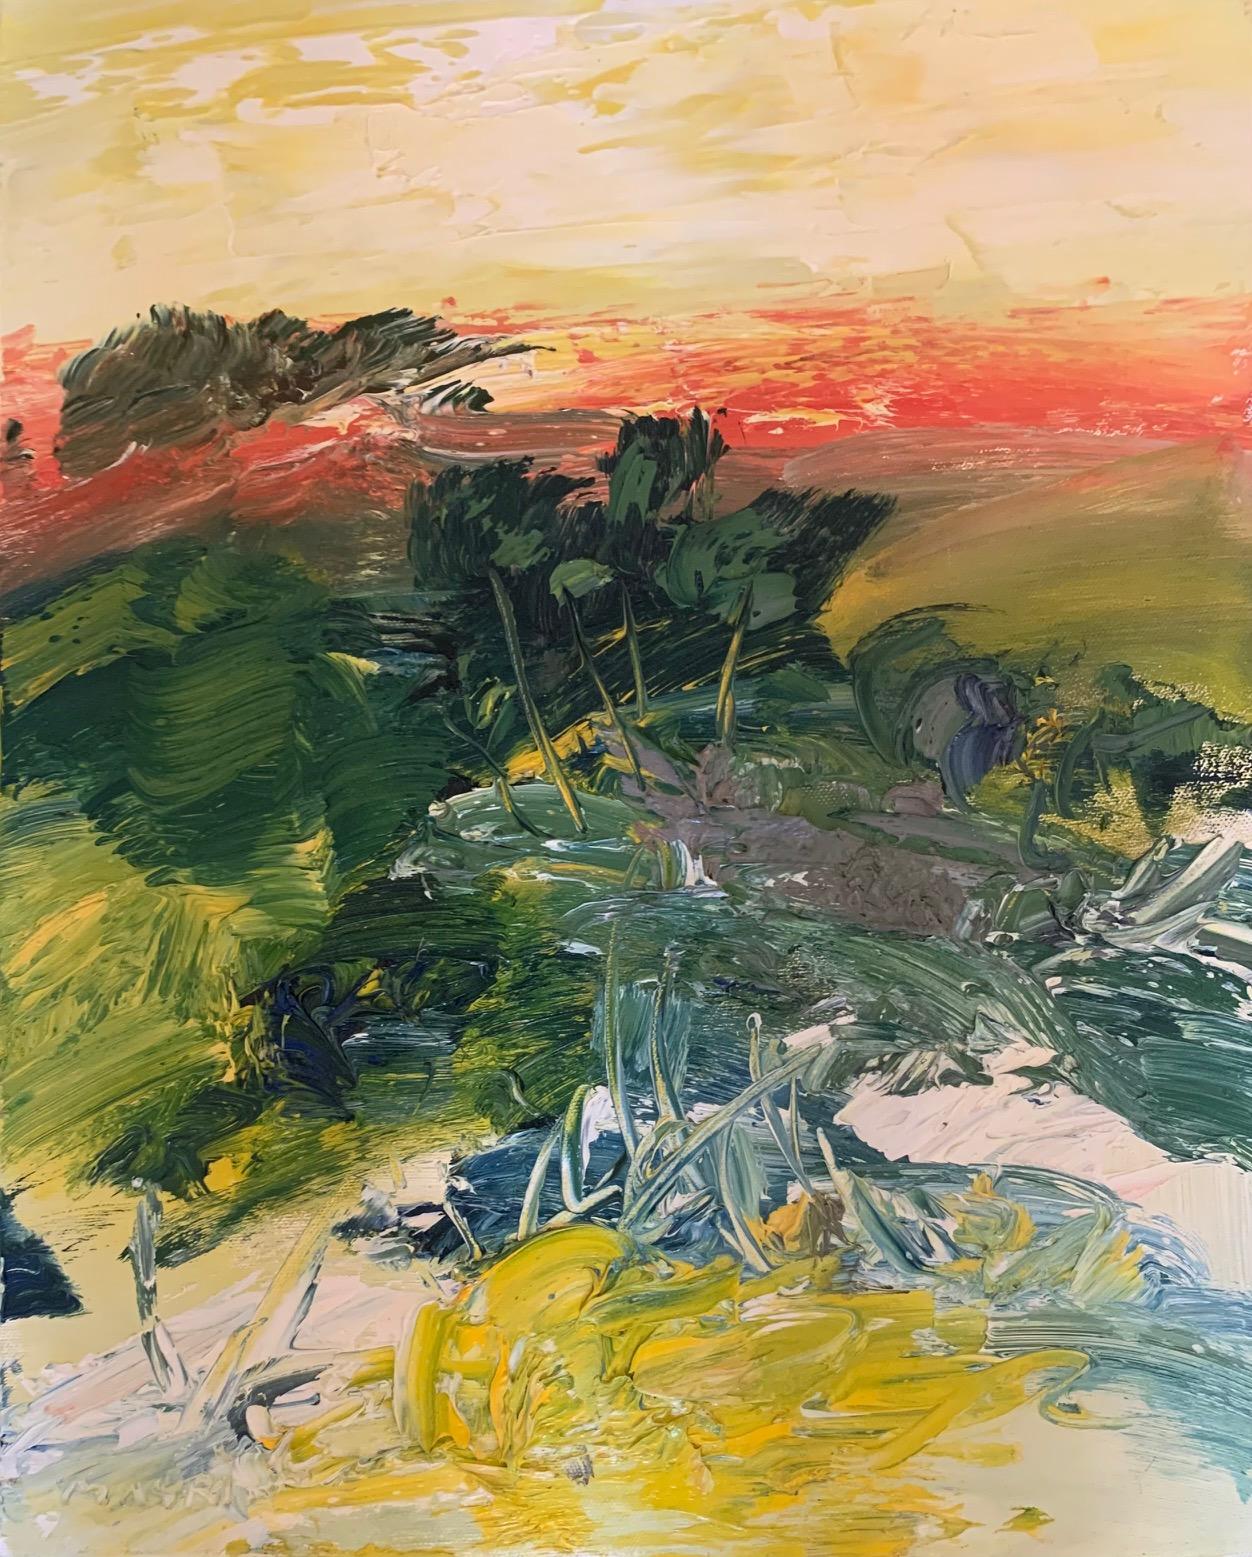 'Sunset' oil on canvas by Masri - Landscape Art